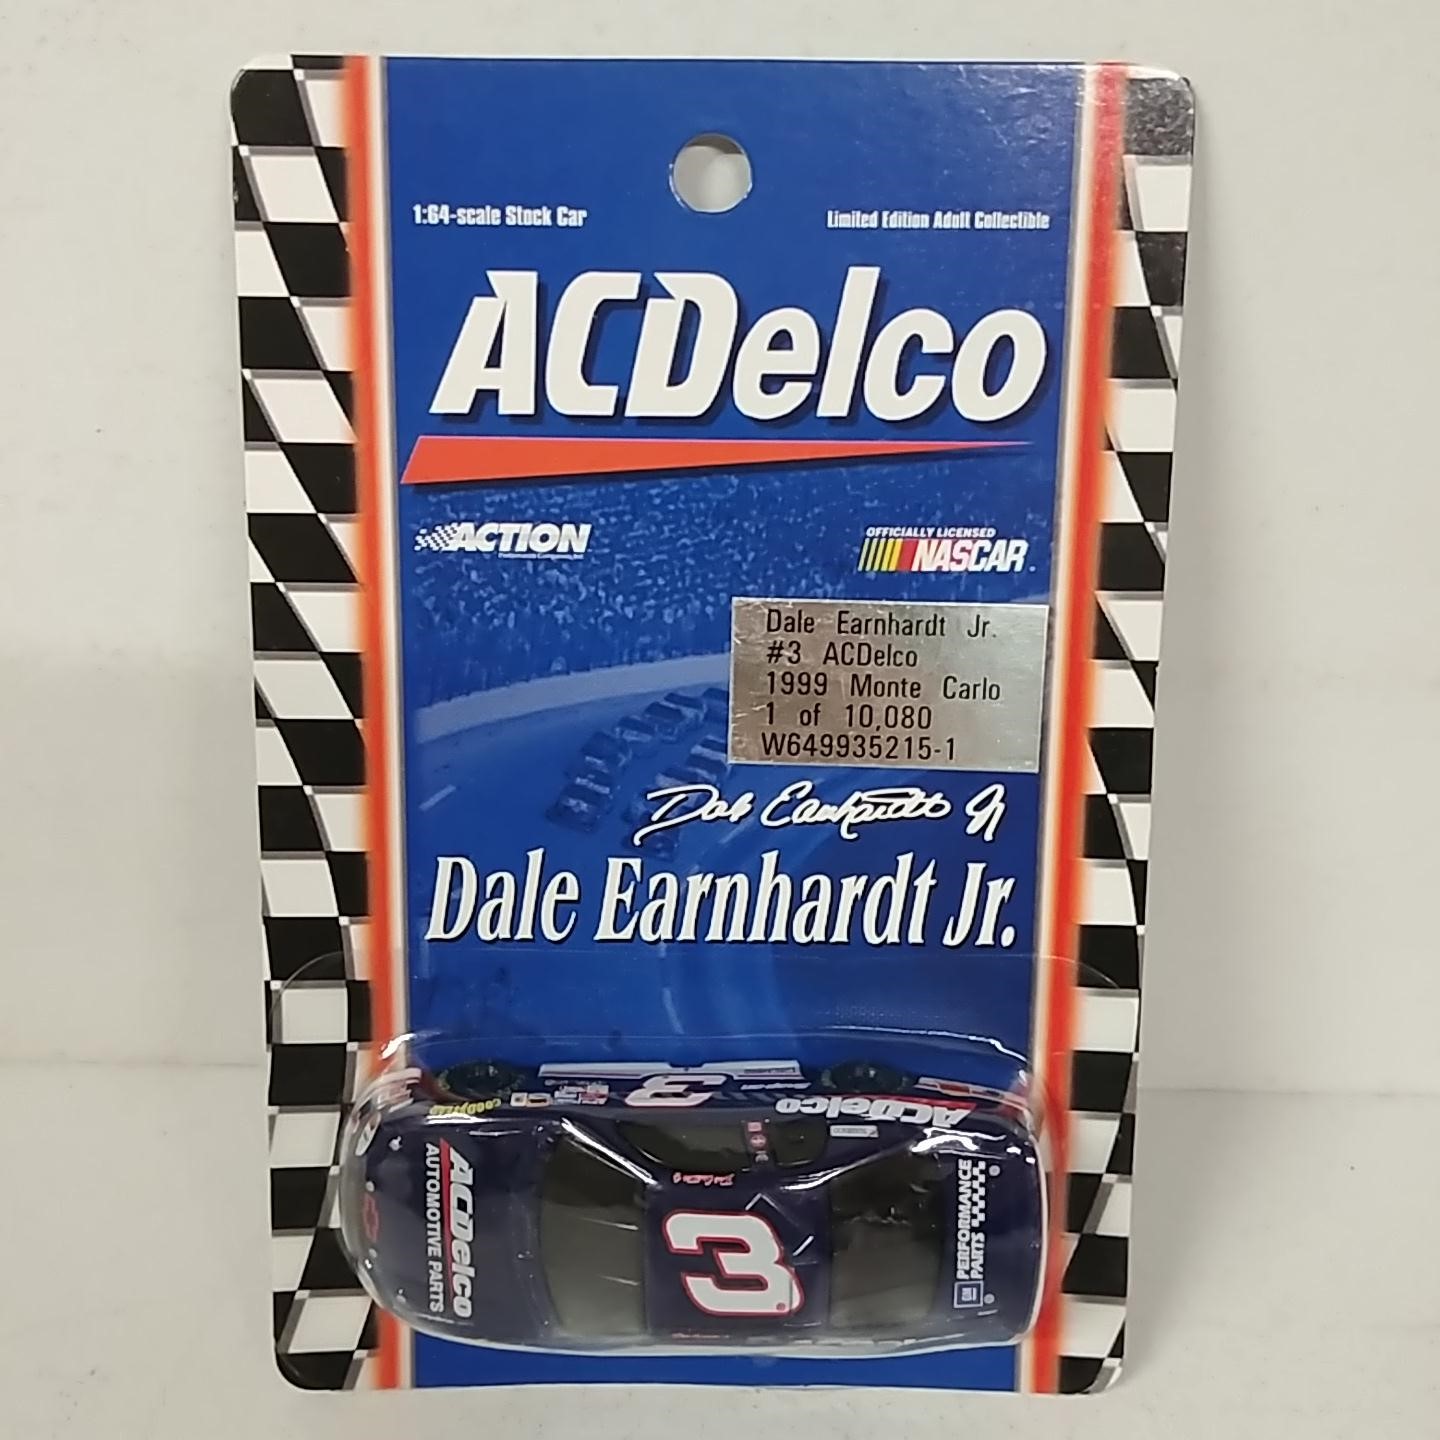 1999 Dale Earnhardt Jr 1/64th AC Delco "Busch Series" black window Monte Carlo